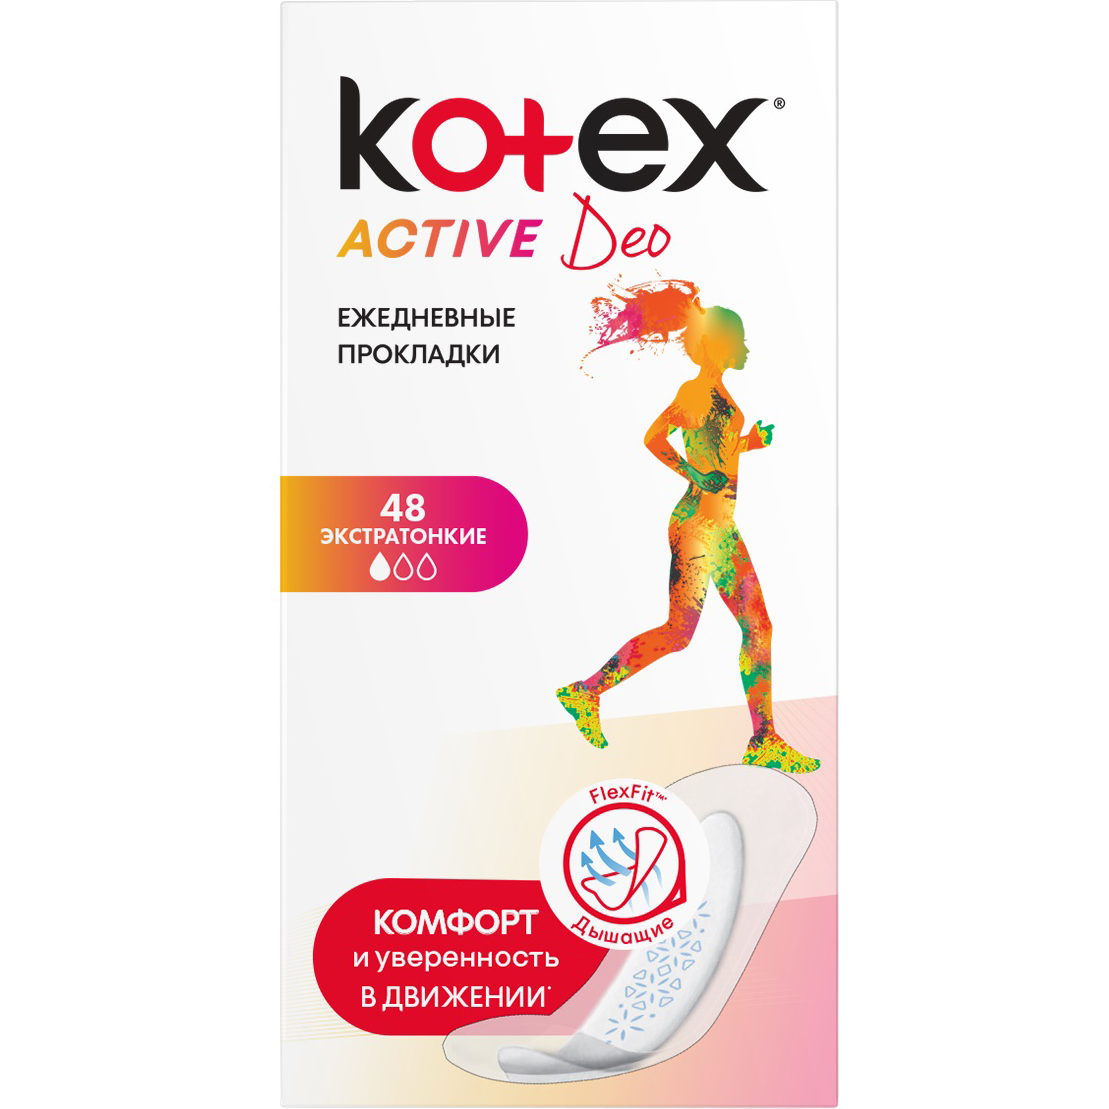 Прокладки Kotex Active Deo Экстратонкие 48 шт прокладки kotex ультра софт нормал дуо 20 шт